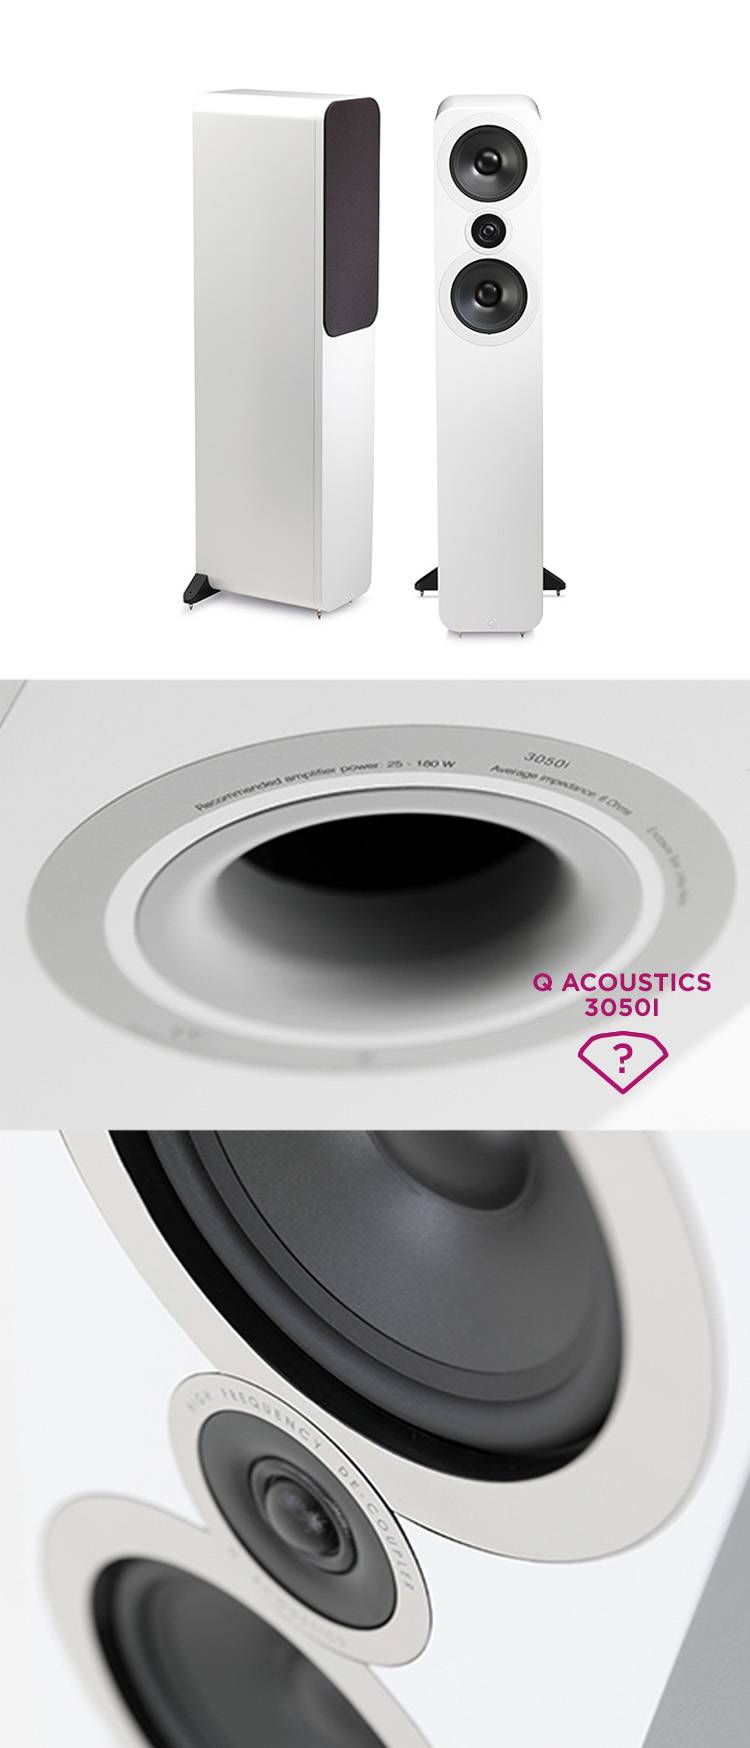 Q Acoustics 3050i